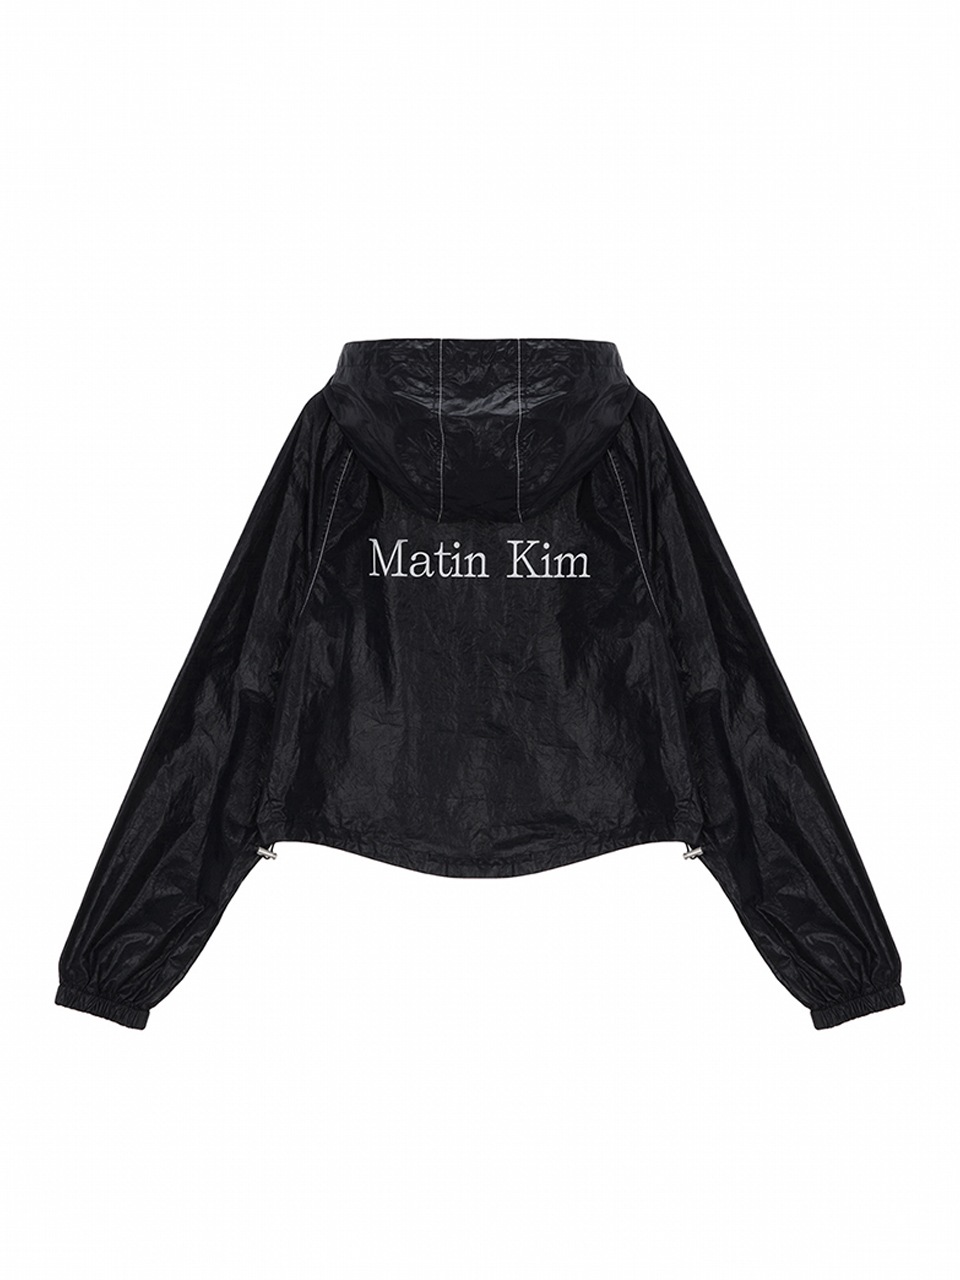 Matin Kim【MATIN KIM】 MATIN CROP HOODY COATING JUMPER IN BLACK